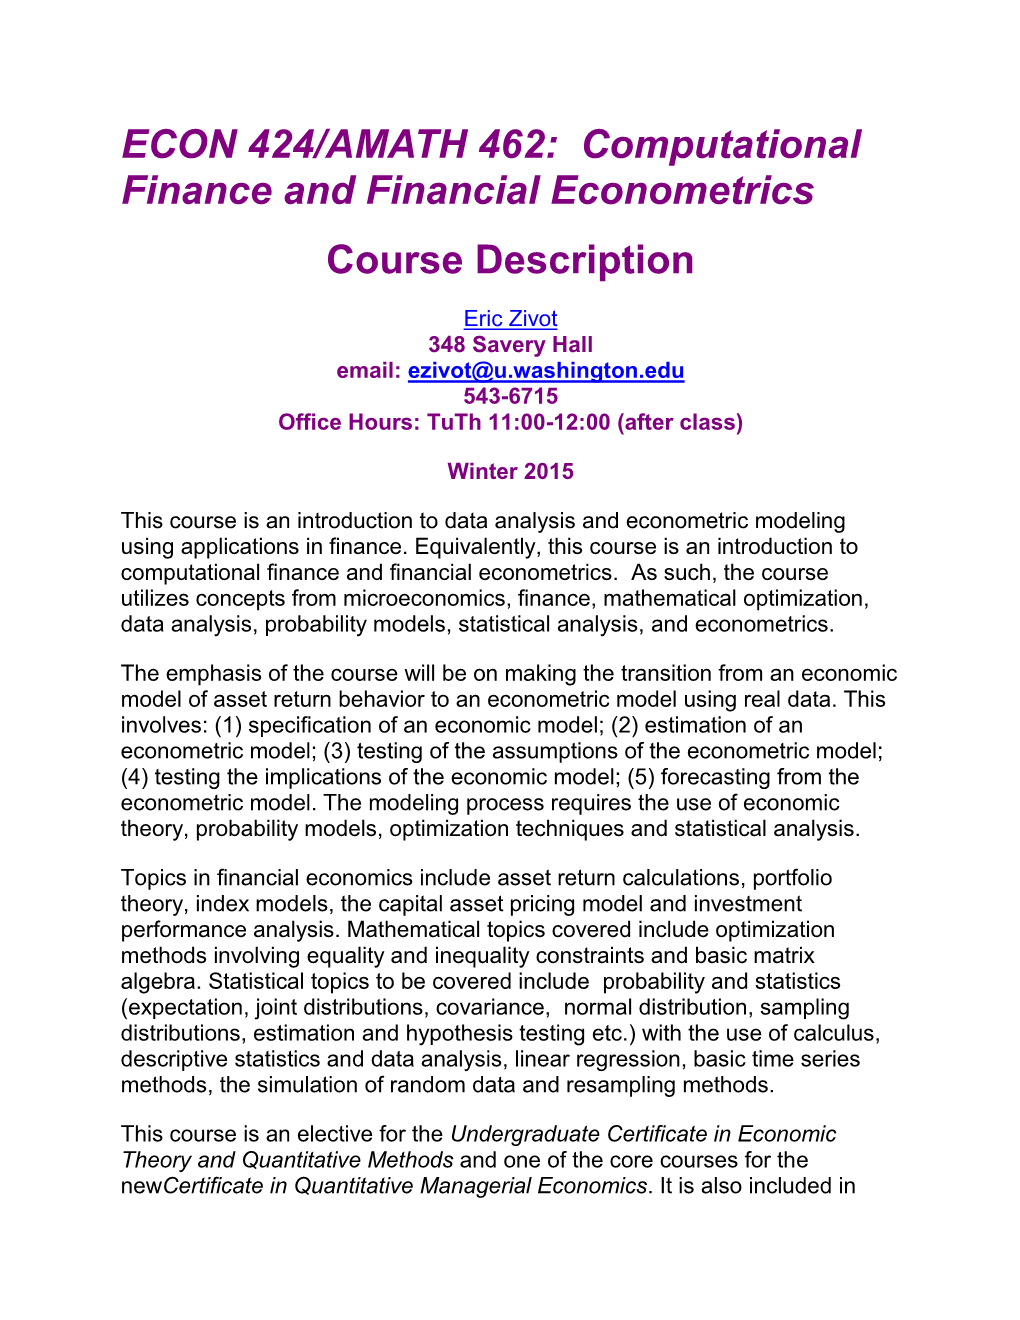 ECON 424/AMATH 462: Computational Finance and Financial Econometrics Course Description